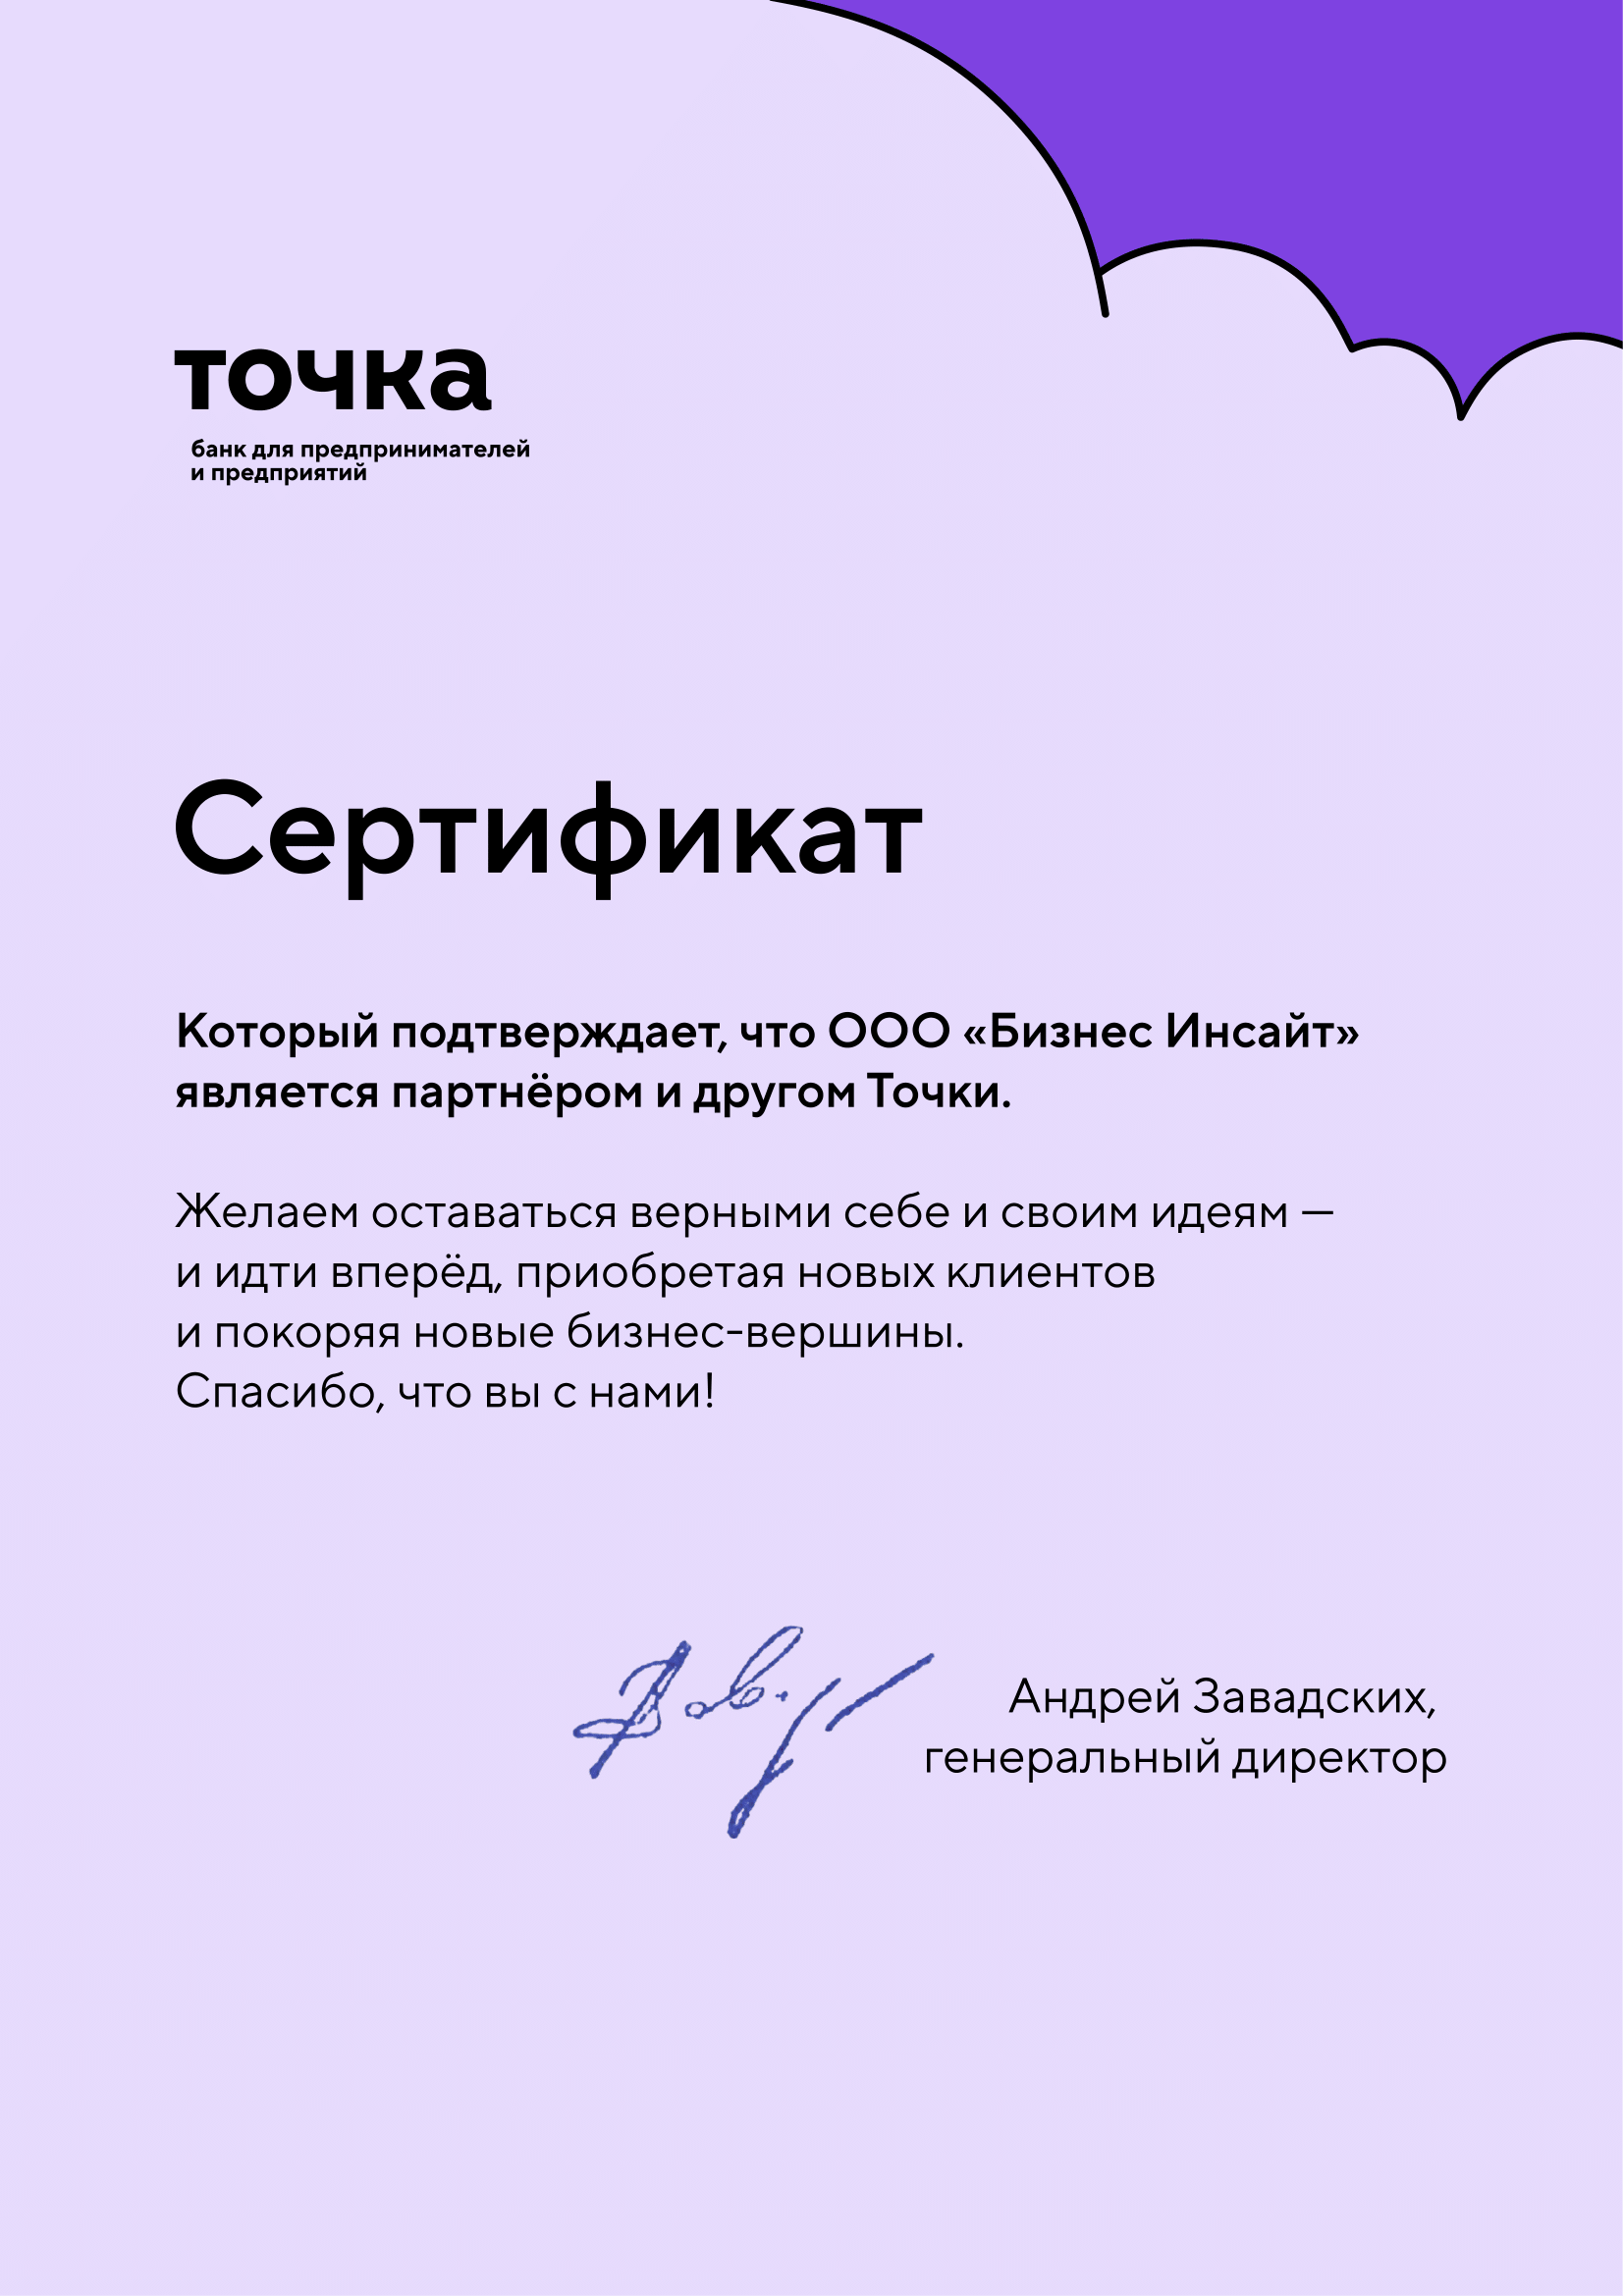 Сертификат партнера Точки ООО Бизнес Инсайт-h6ptbmr5dfyoik64xpbg8pcppe